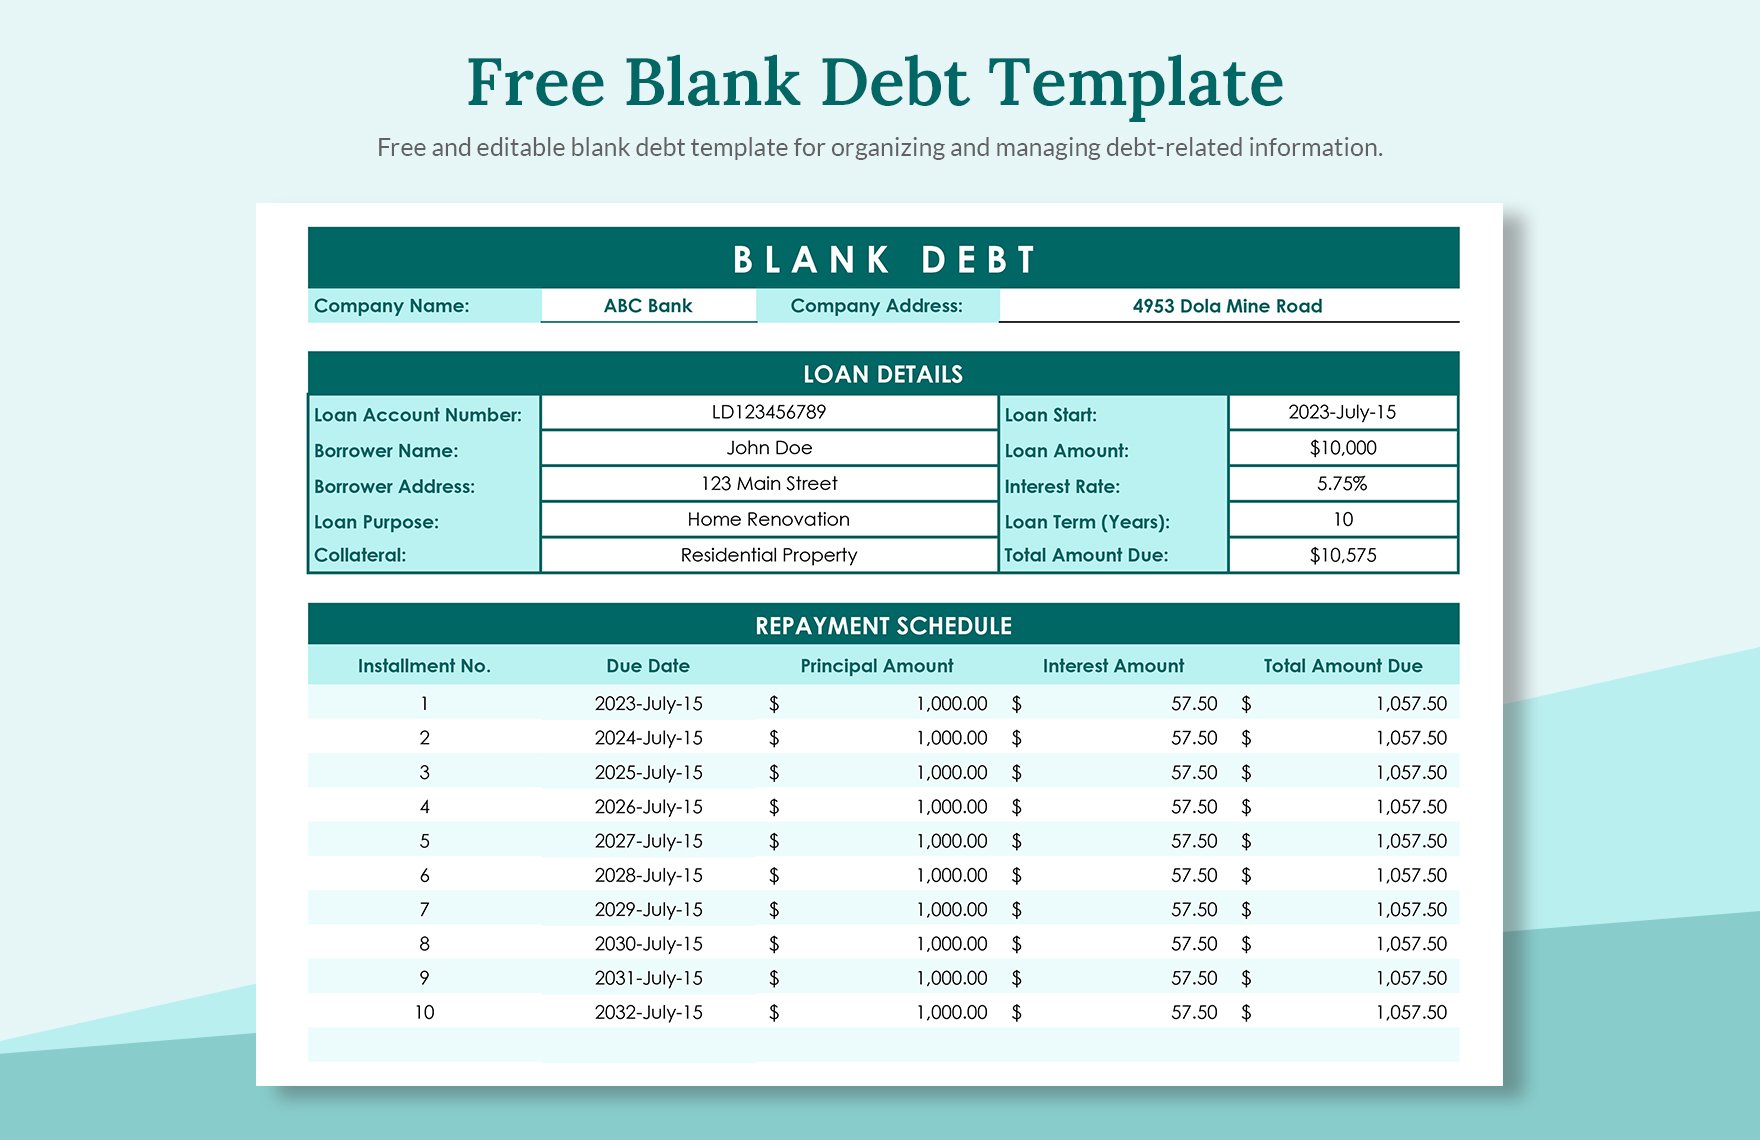 Free Blank Debt Template